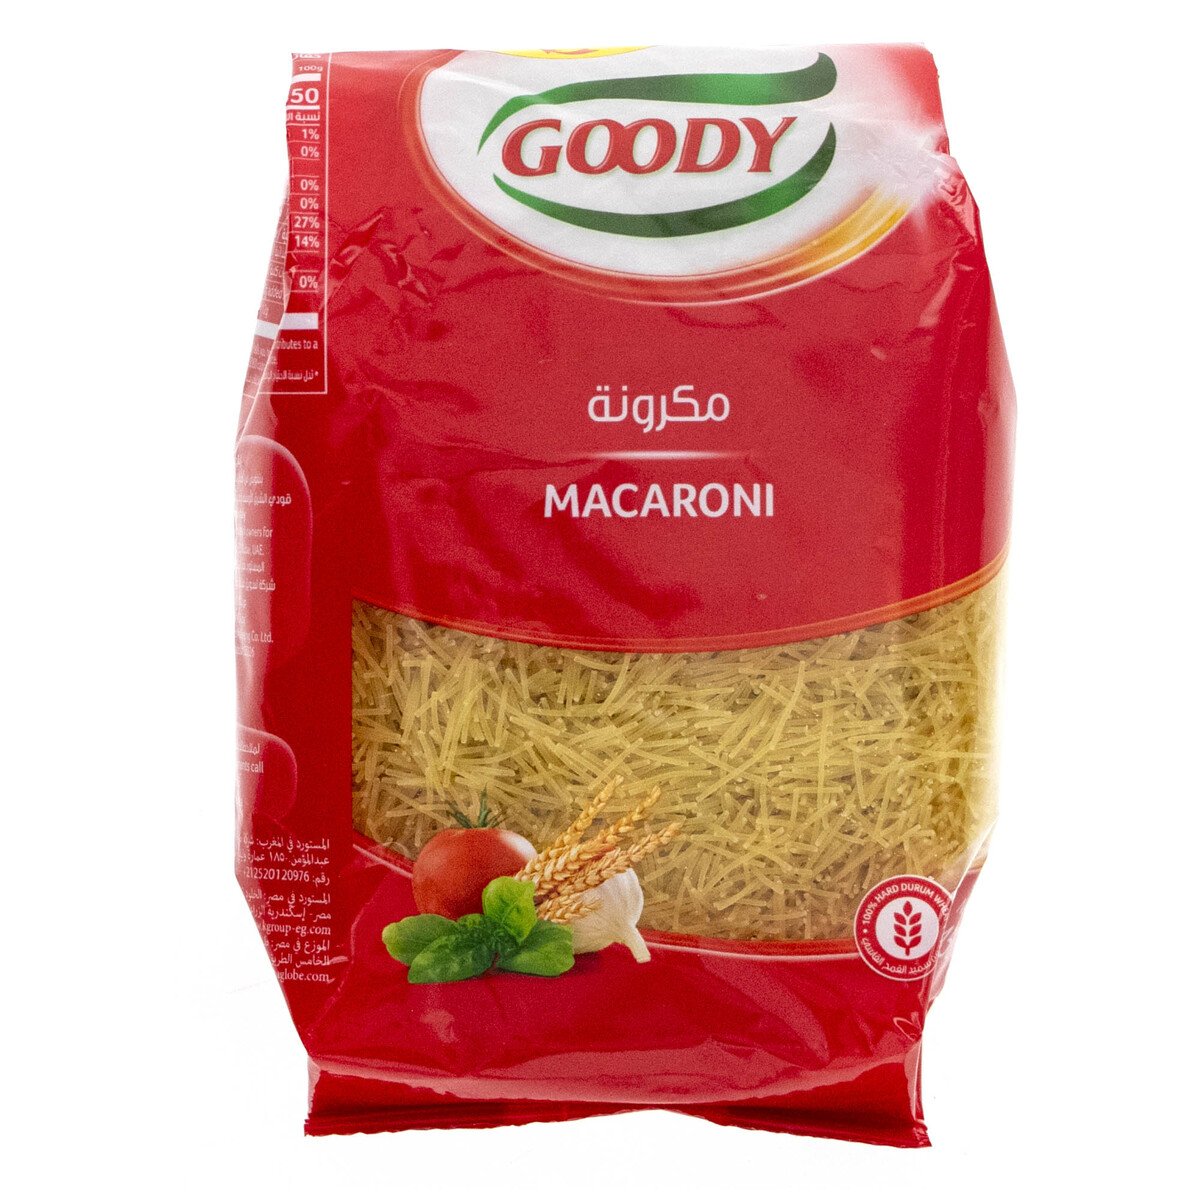 Goody Macaroni Vermicelli Cut No.61 450 g